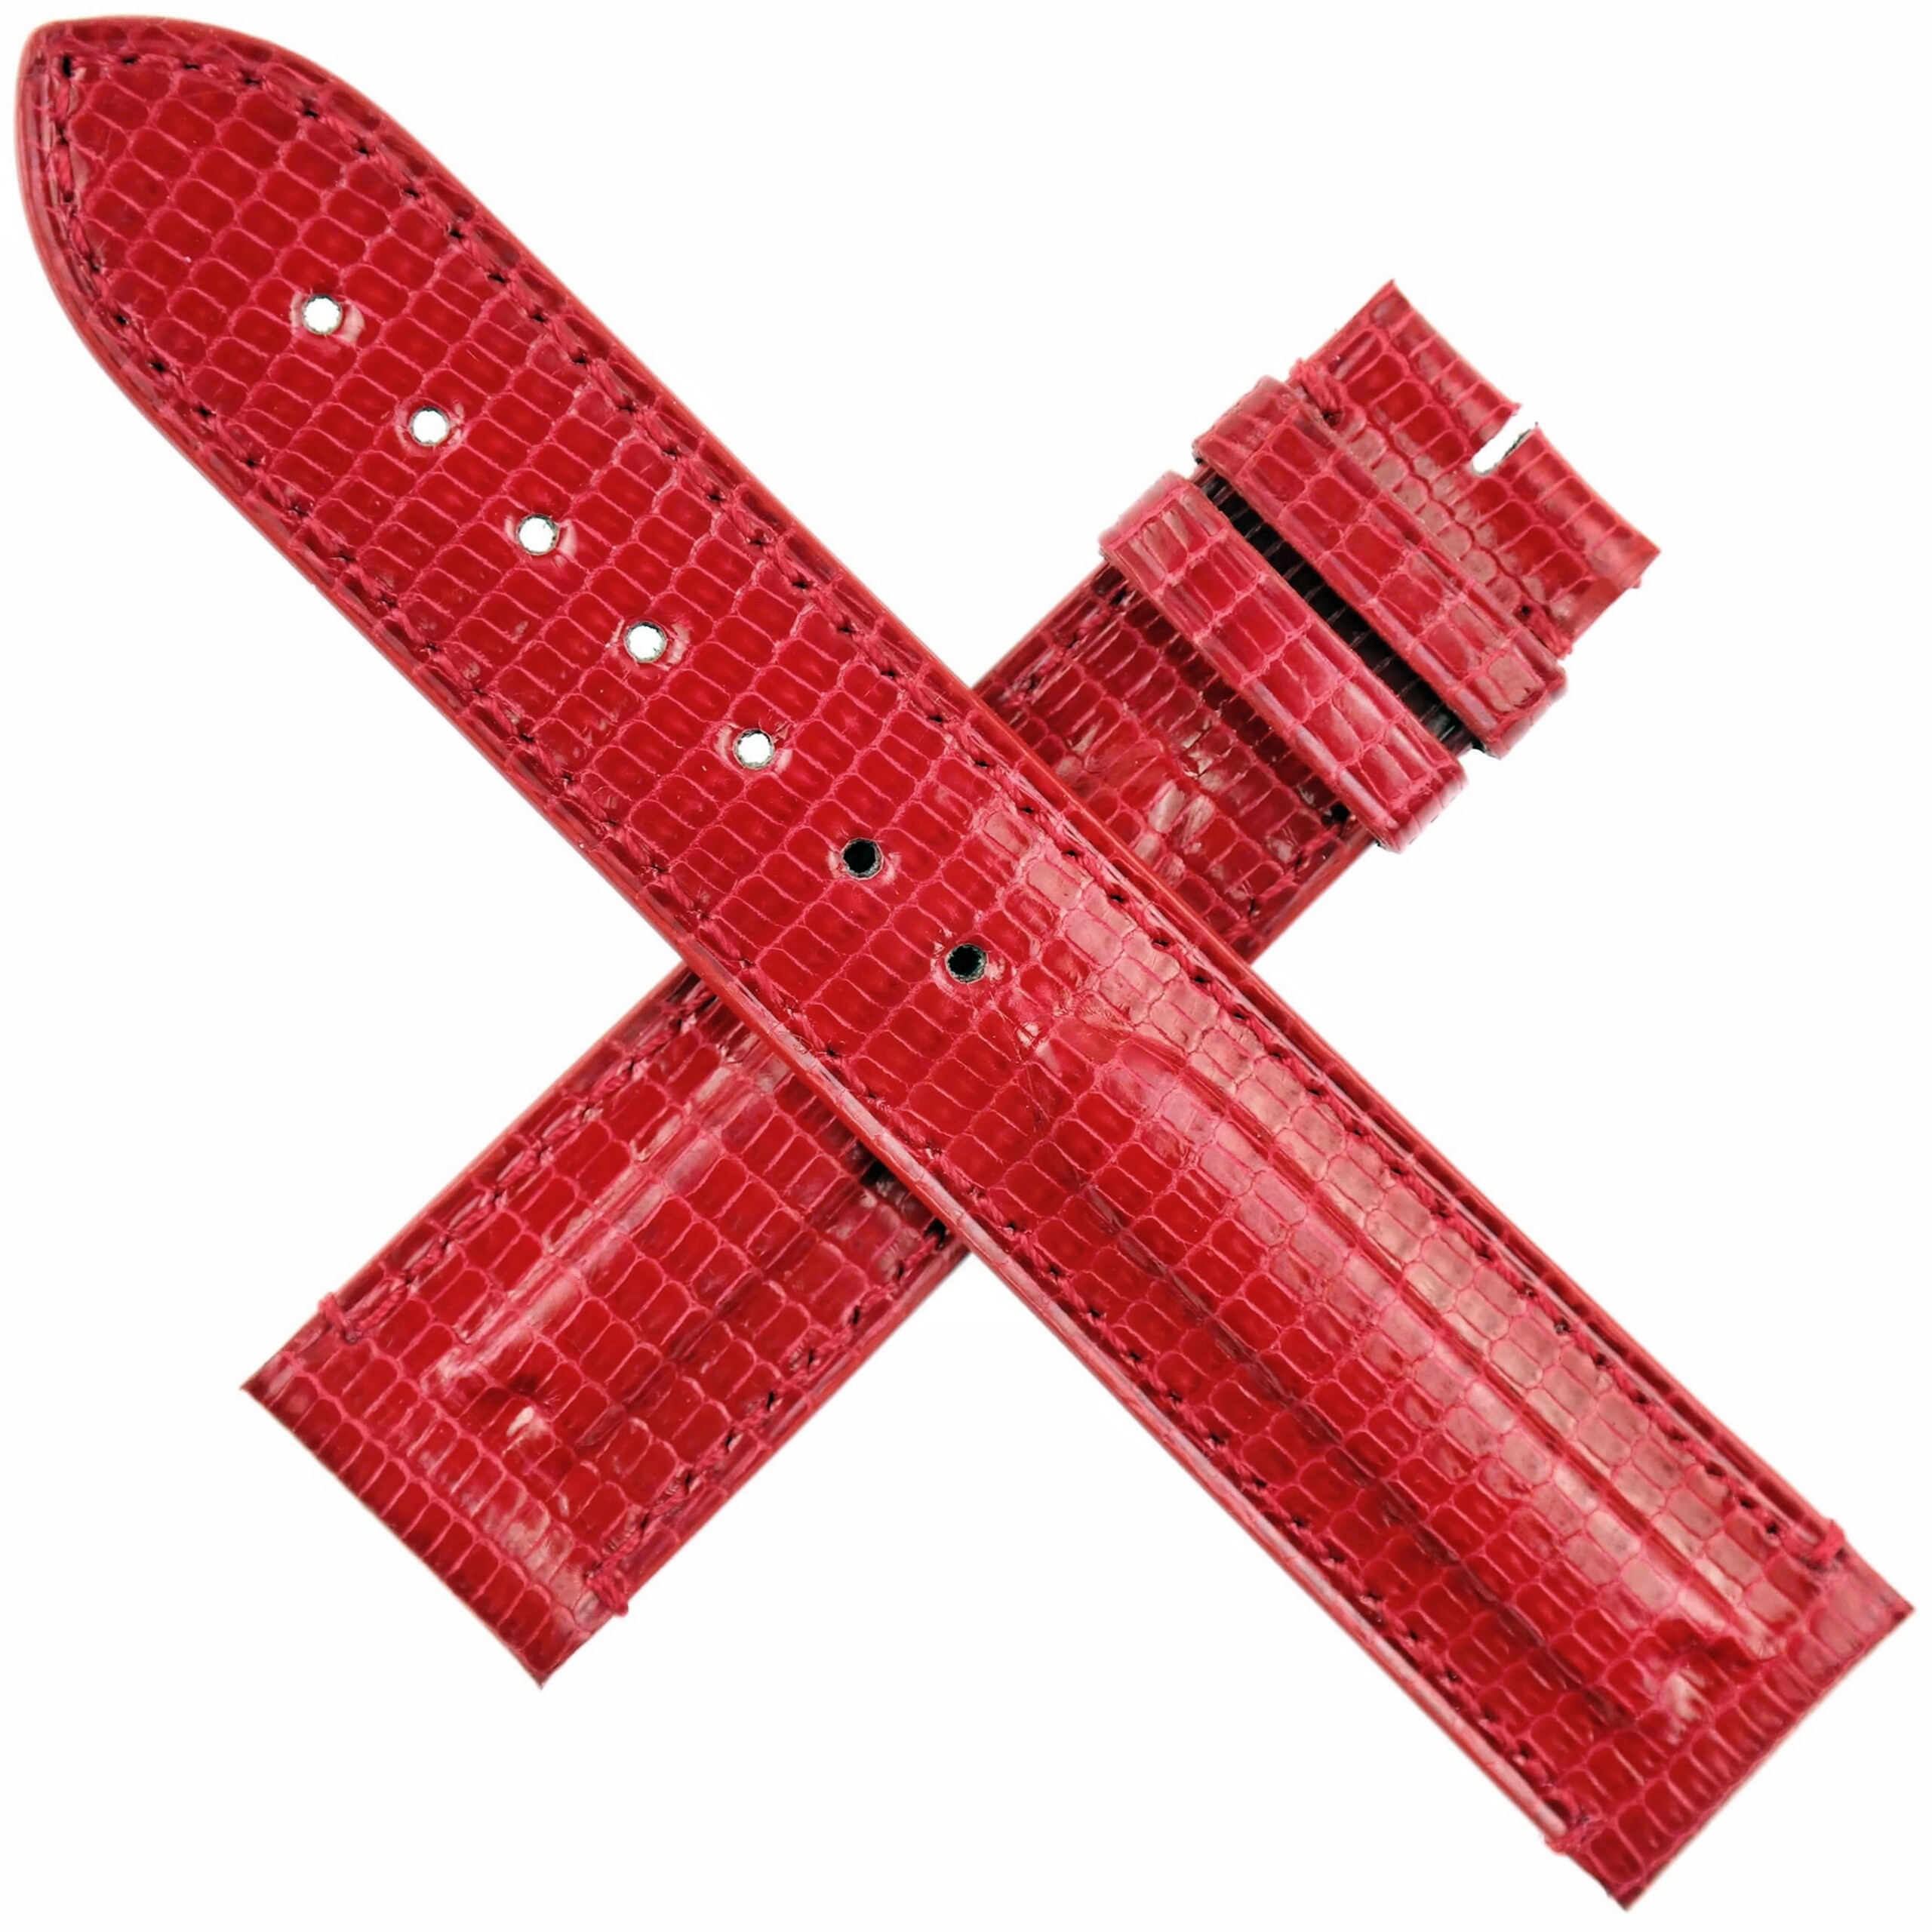 RODOLPHE - Luxury Watch Strap - 20 mm - Genuine Lizard - Swiss Made - Red